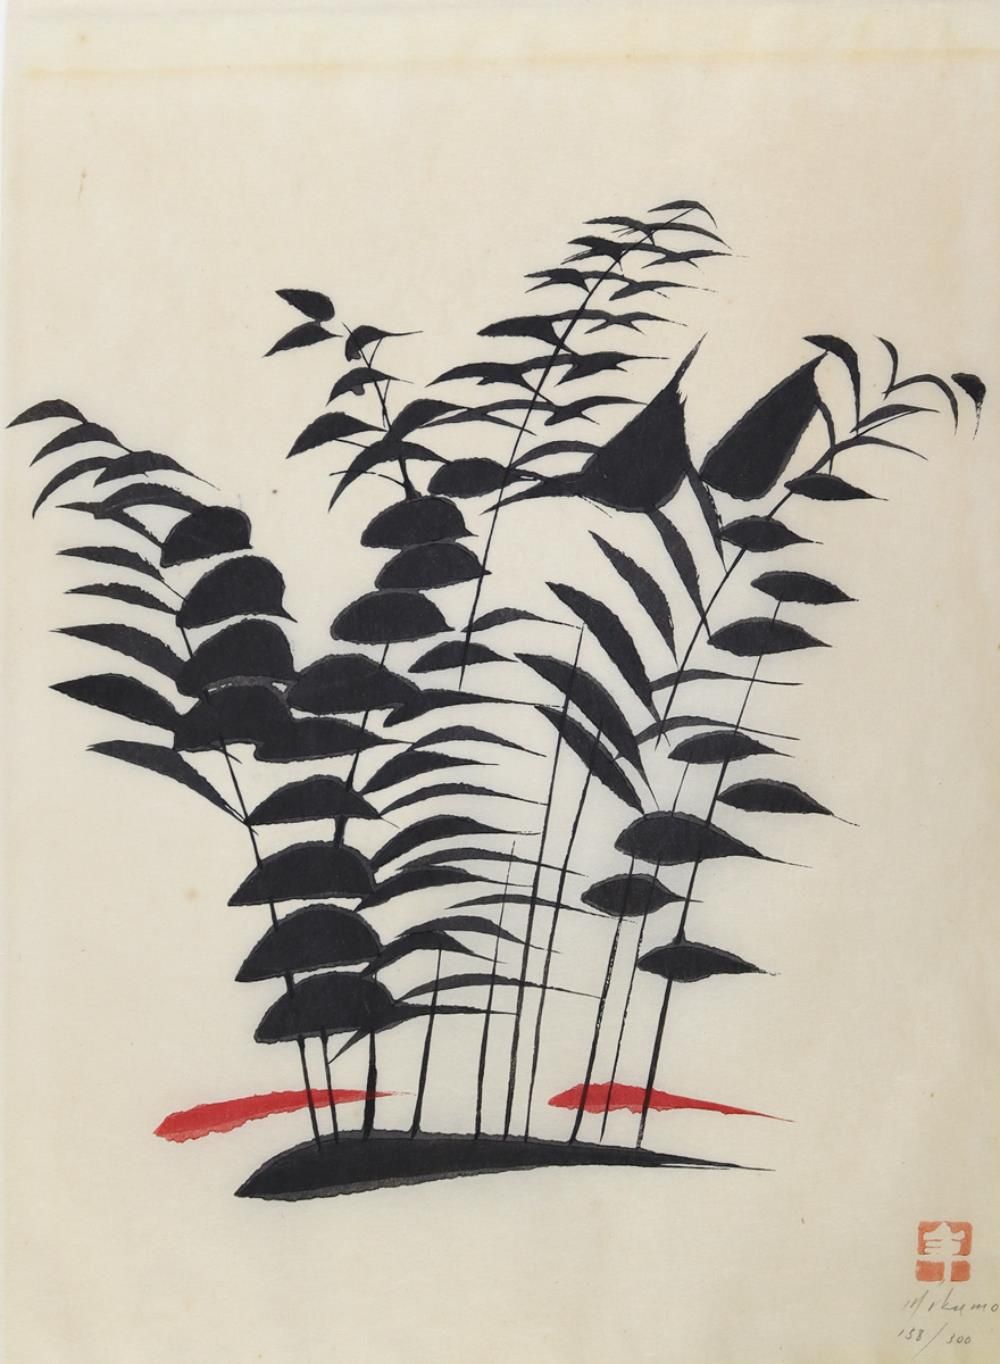 Inagaki, Nenjiro (auch: Toshijiro Inagaki, 1902-1963) attribuito. Rappresentazio&hellip;